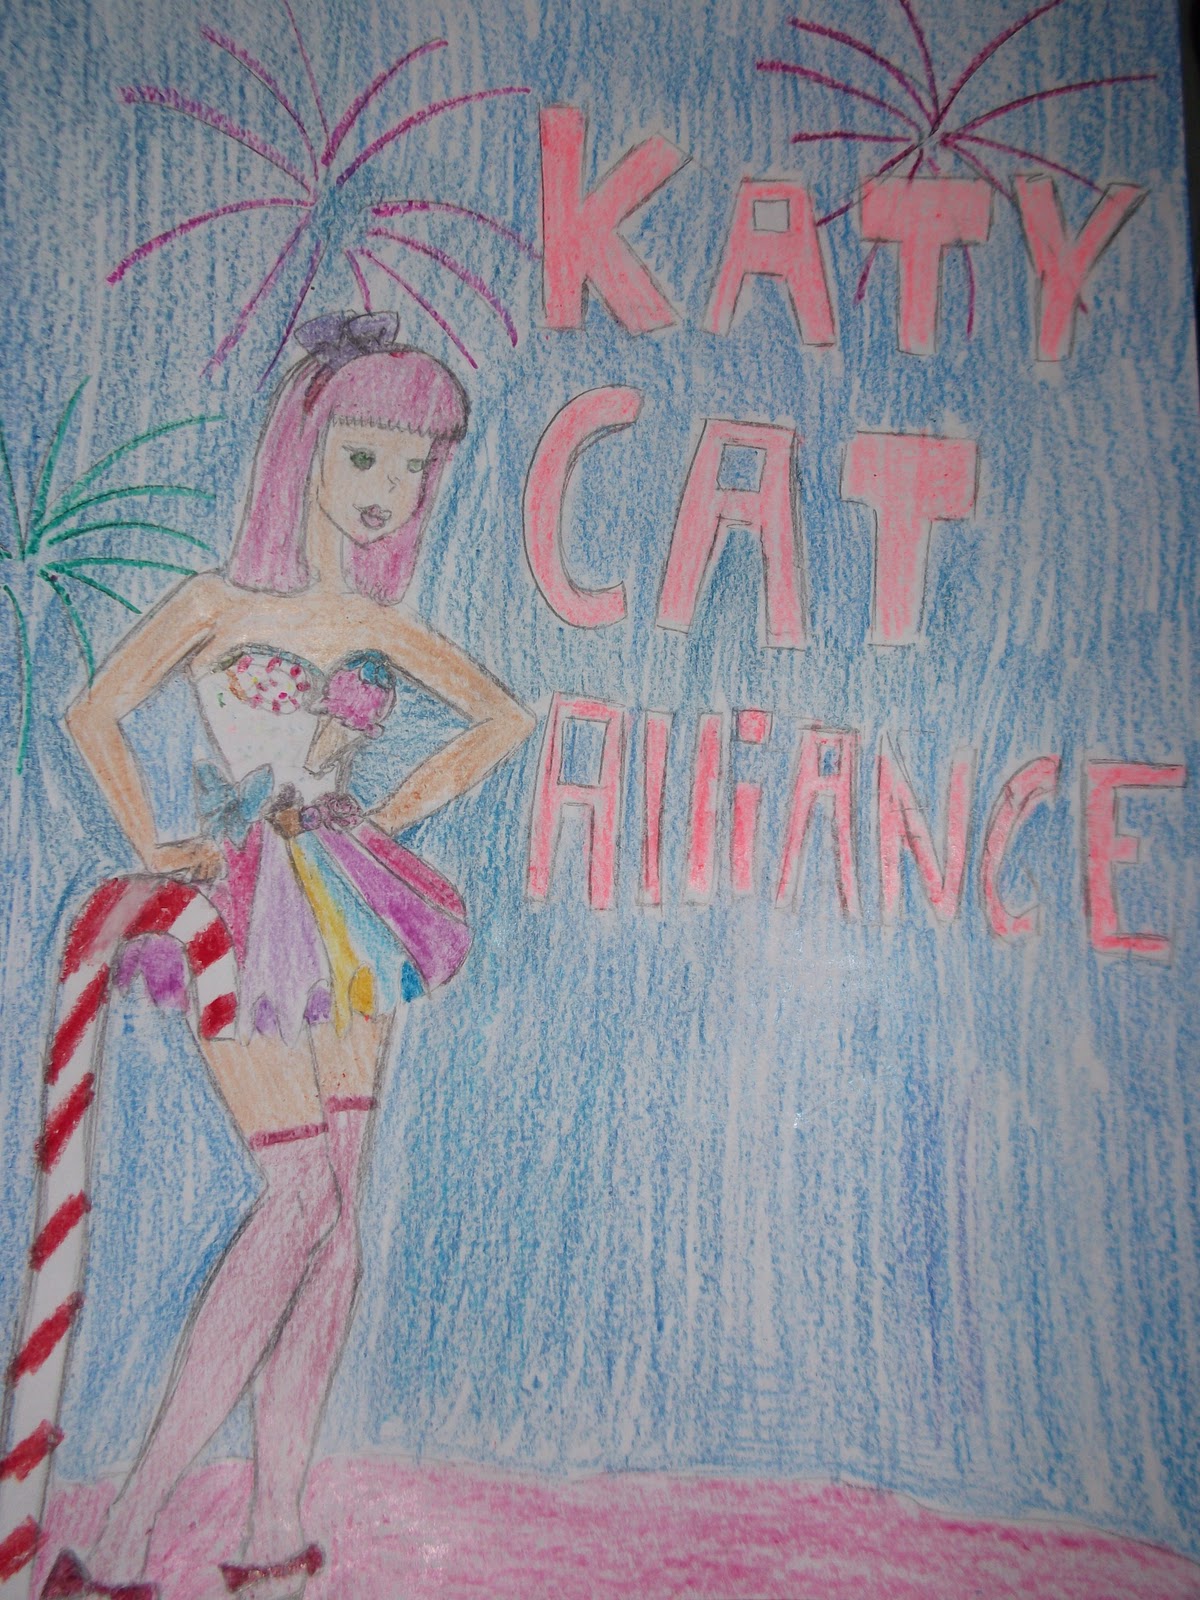 http://4.bp.blogspot.com/-yoQyD2X3Edk/TWQ0iLRcwCI/AAAAAAAAAEc/-Cy1dg93oAE/s1600/katy+cat+alliace.JPG